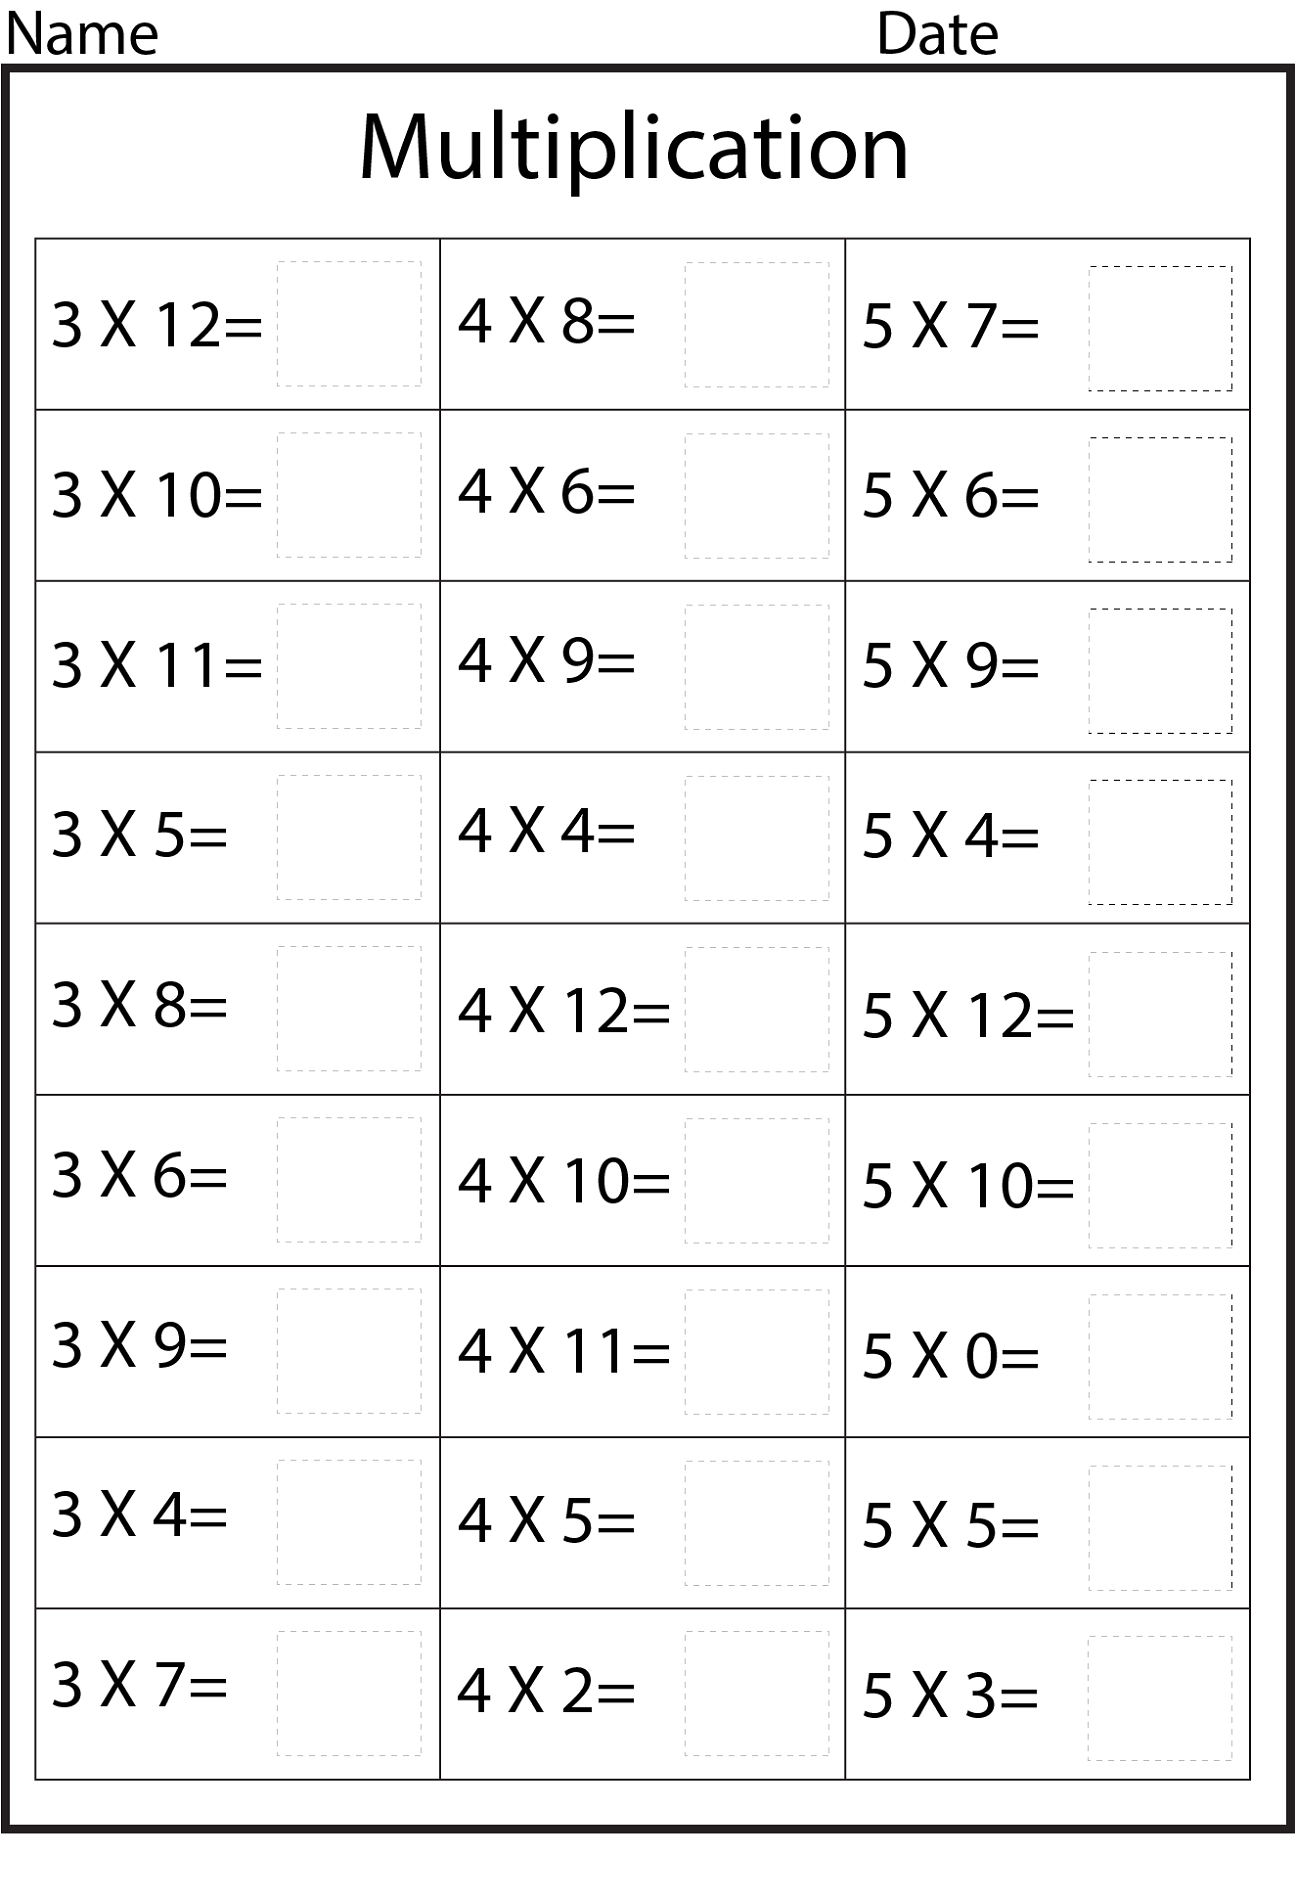  Multiplication Worksheets 3 Times Tables PrintableMultiplication